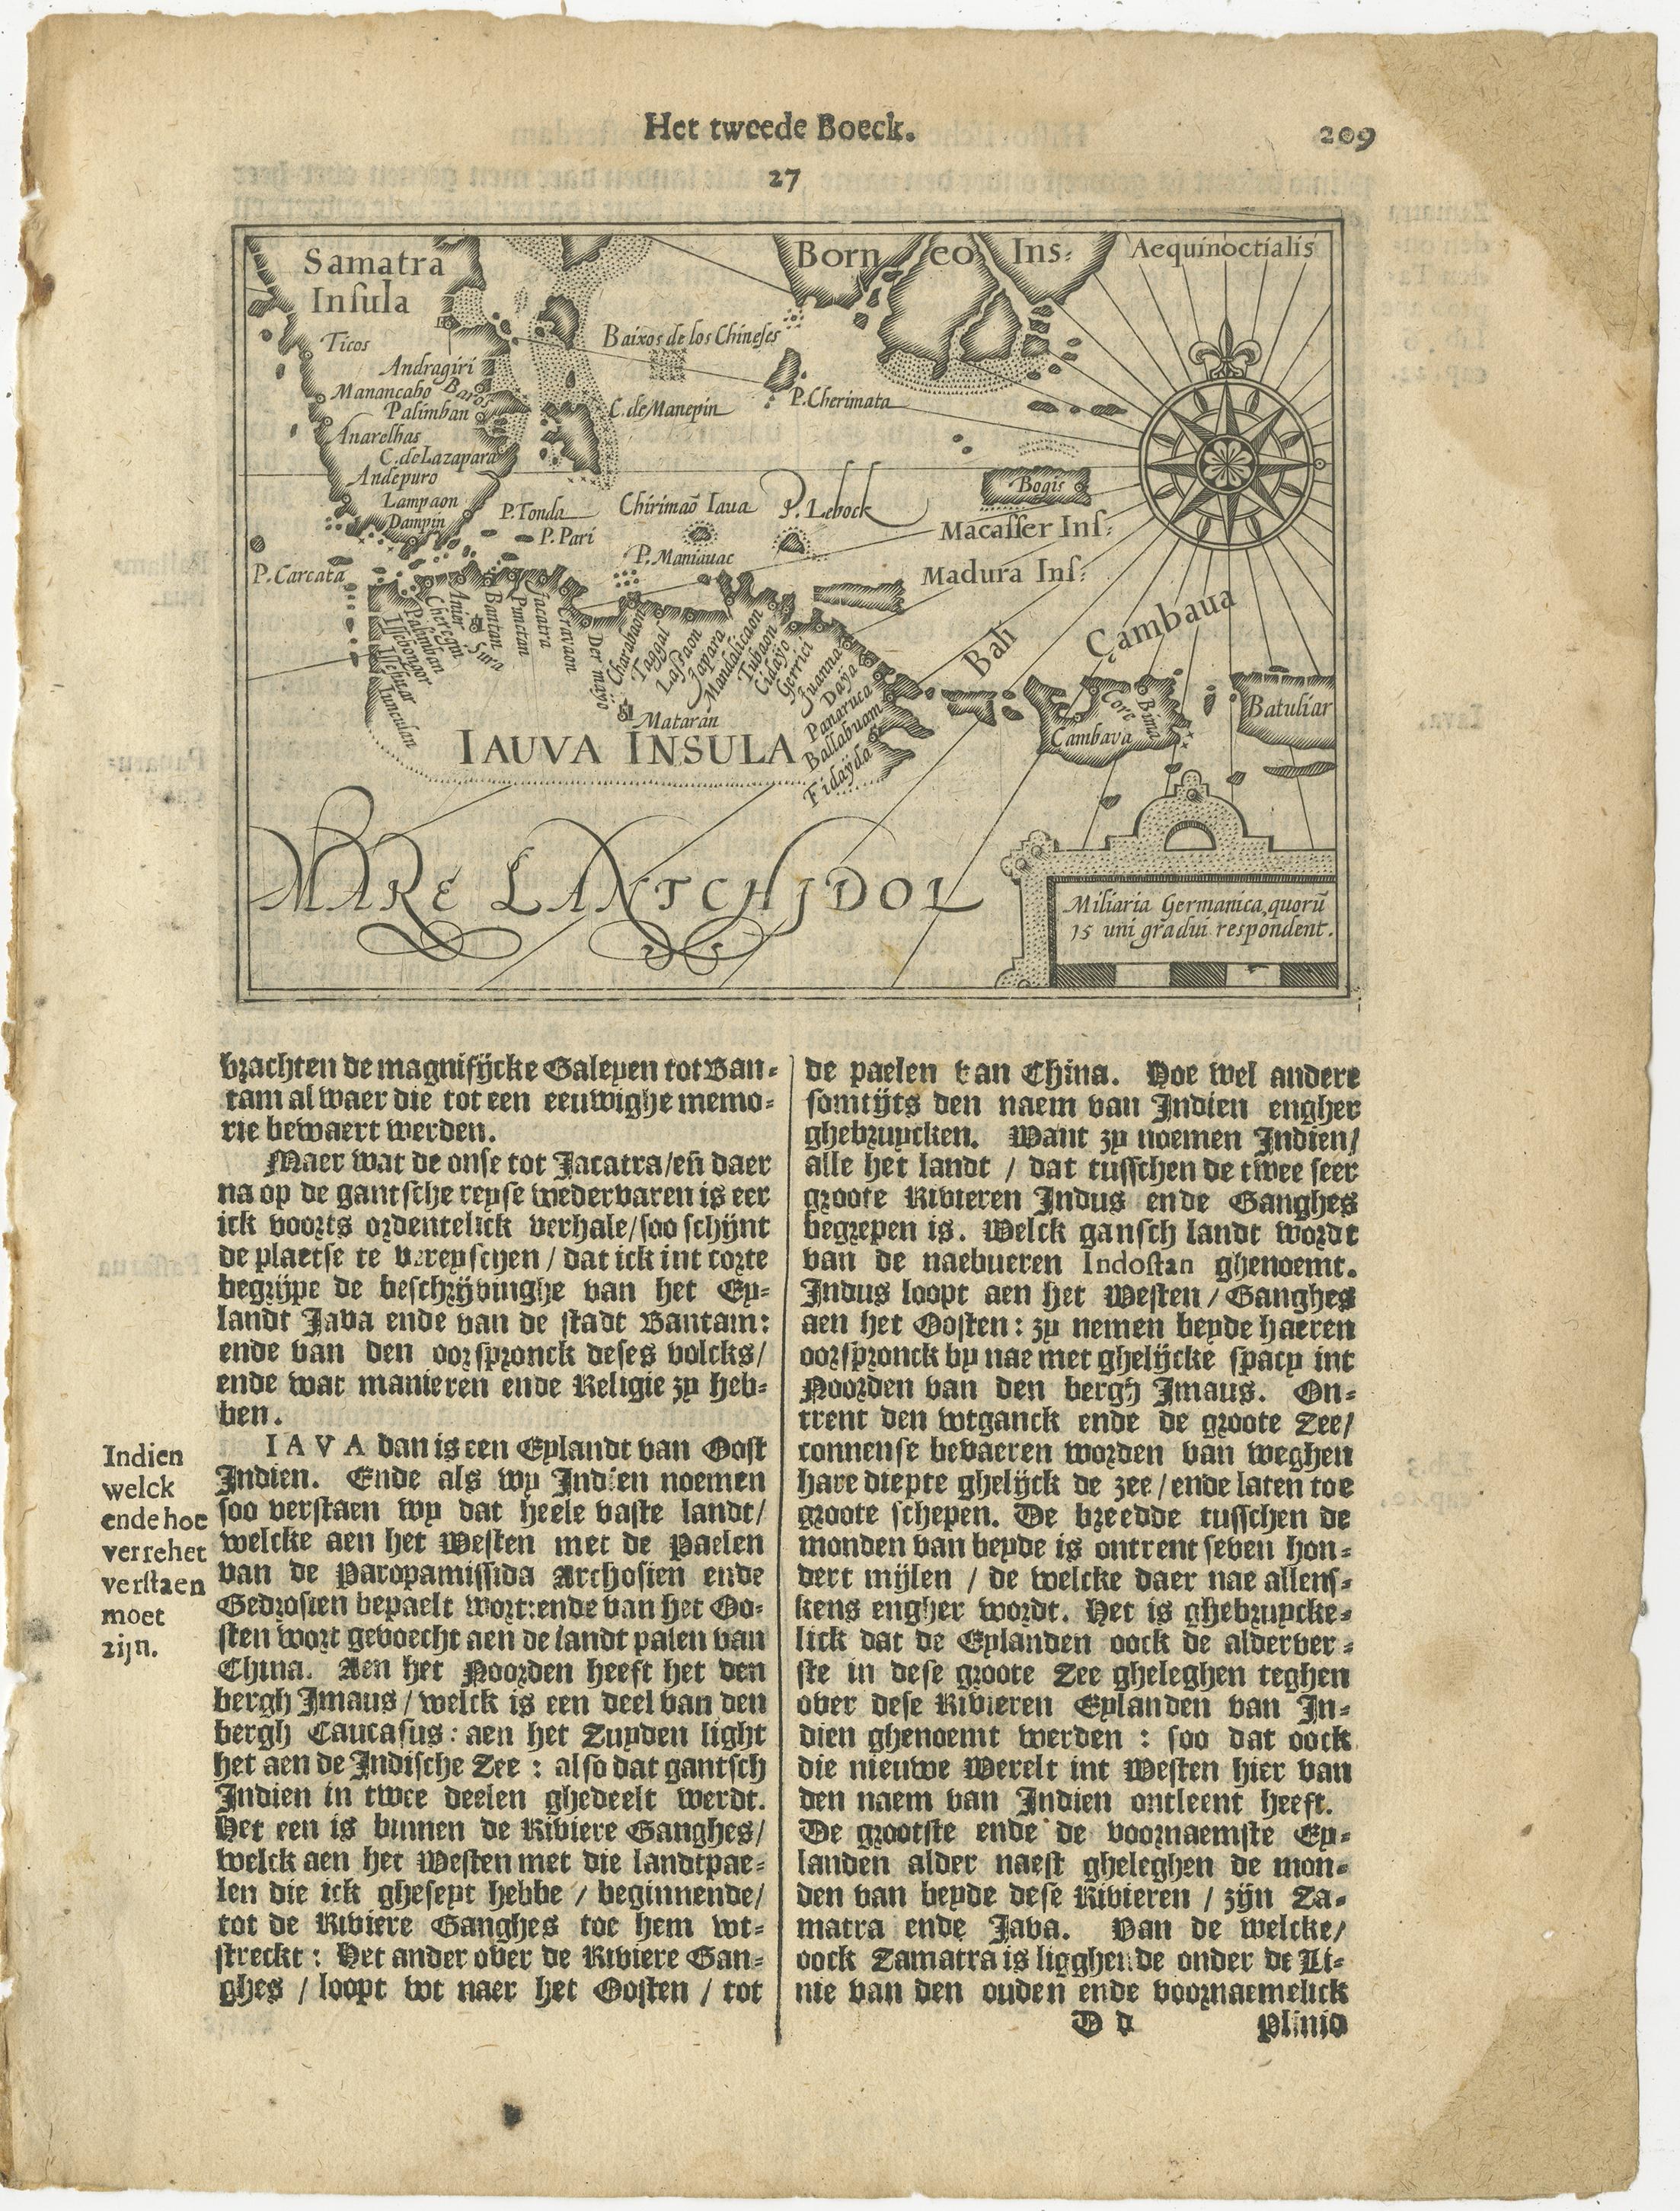 One of the first maps of the Indonesia islands of Java, Bali, Sumbawa etc. in early days of the Dutch Indies. Also showing Banten, Jakarta (Jacatra), Indragiri, Barus Tiku, Palembang, Indramayu, Tegal, Jepara, Kota agung, Bima, Makassar